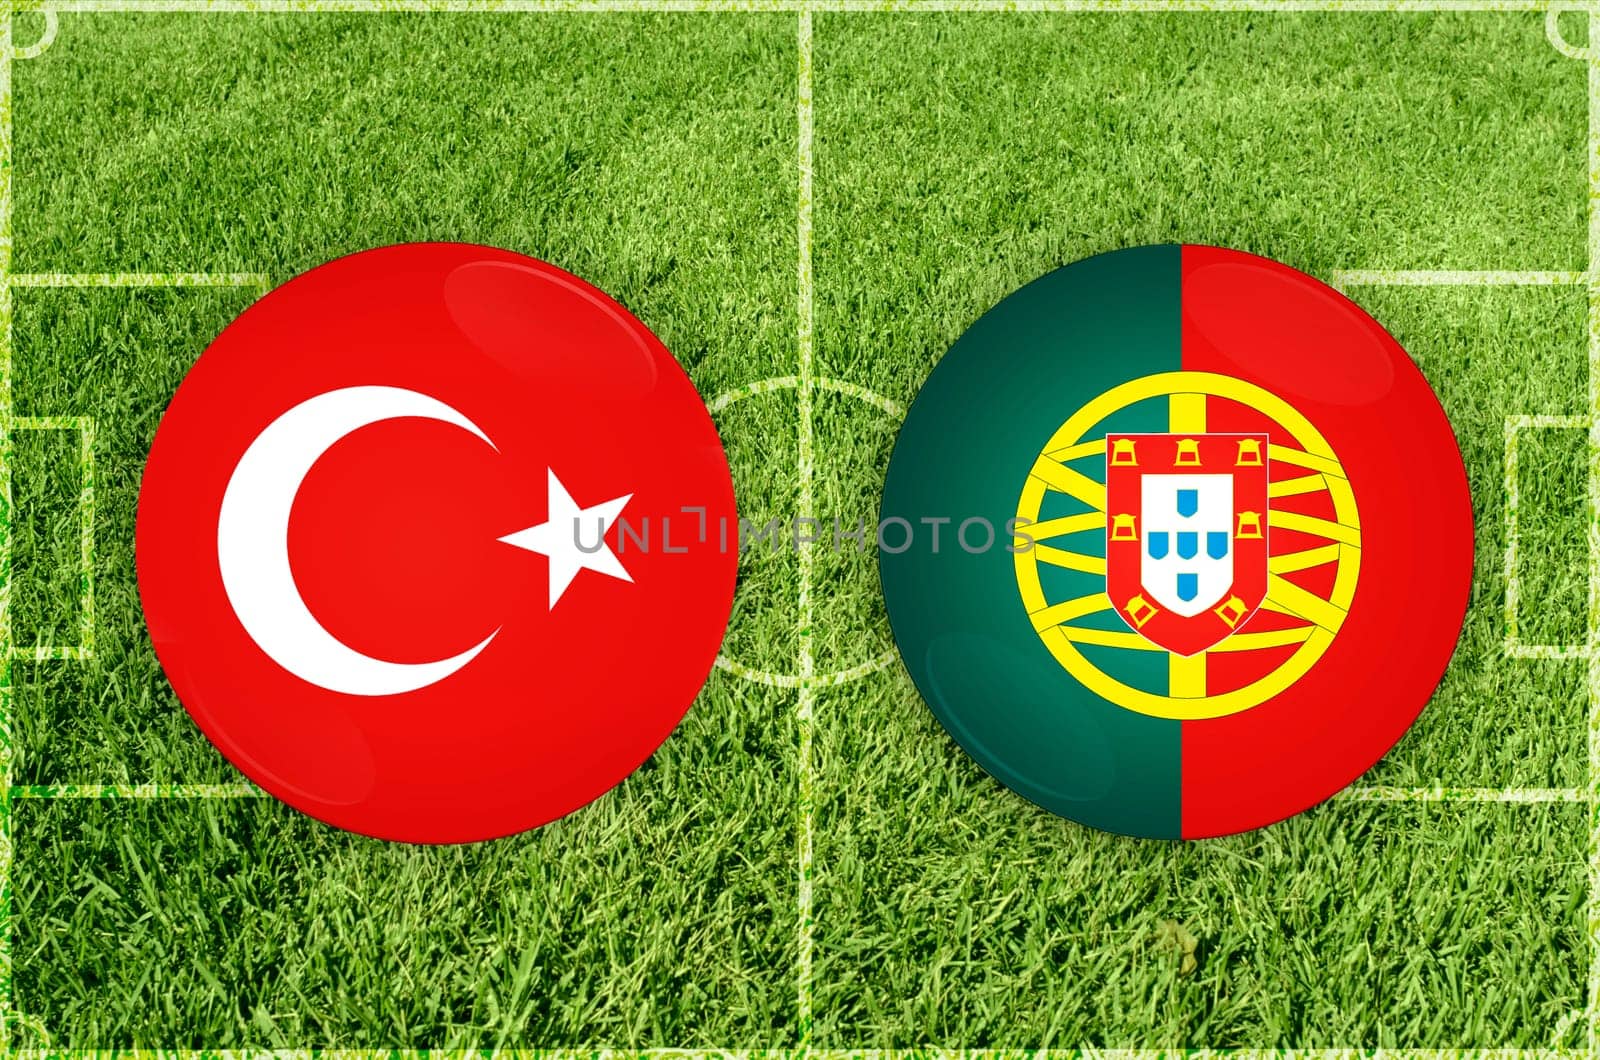 Turkey (Turkiye) vs Portugal football match by rusak